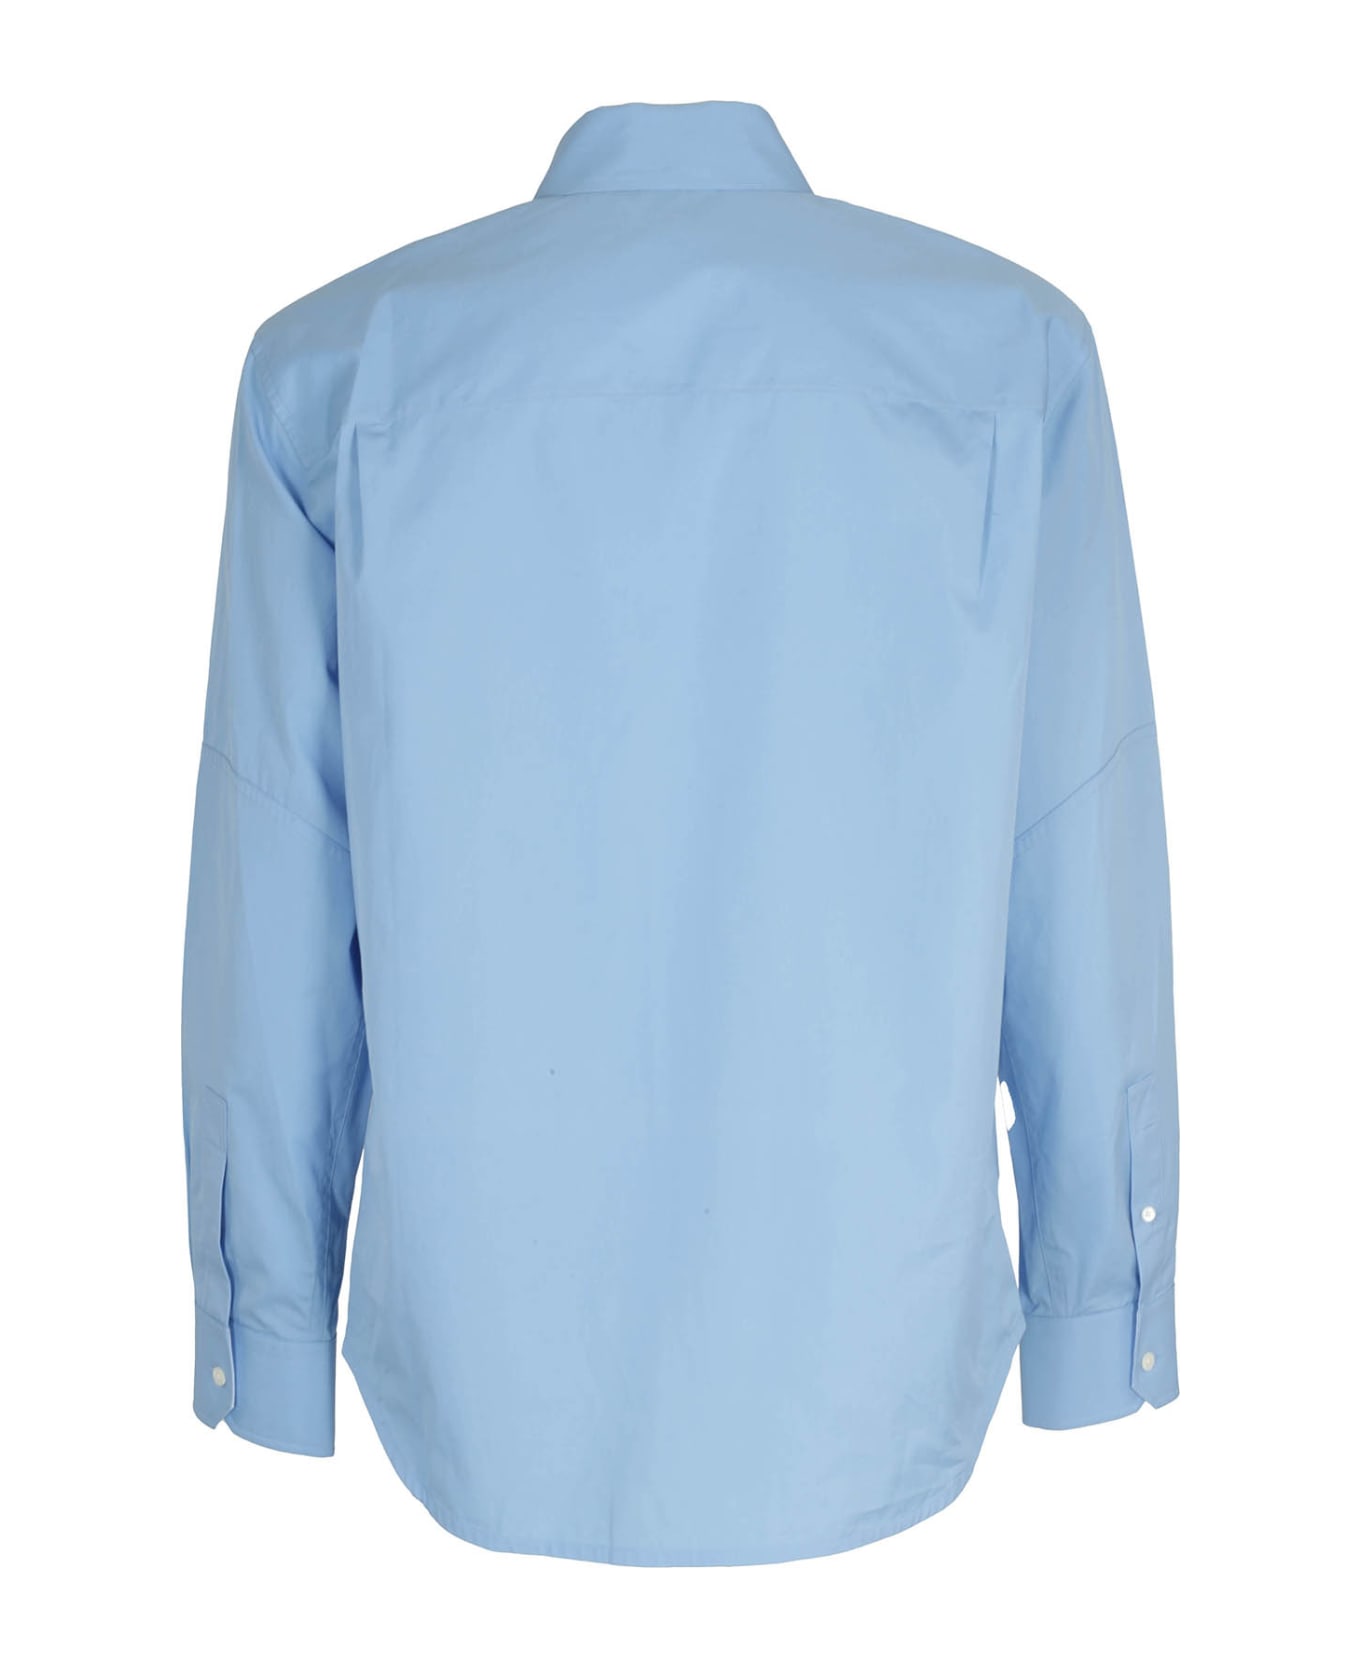 Helmut Lang Dress Shirt - K Placid Blue